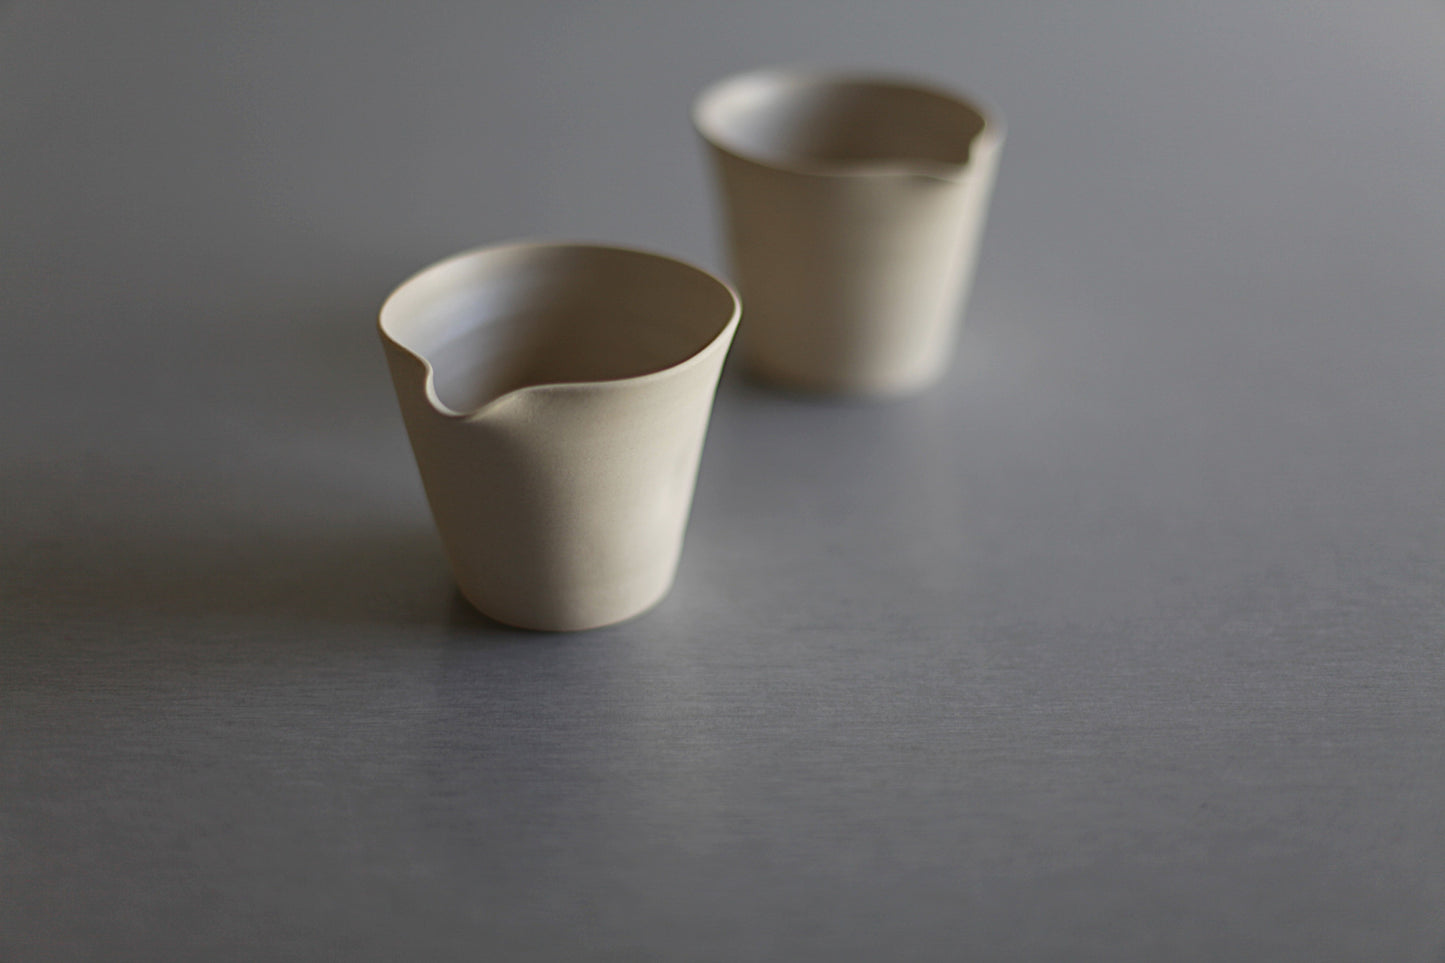 Beaker, ceramic pourer - stoneware, 180 ml - 6.08 oz